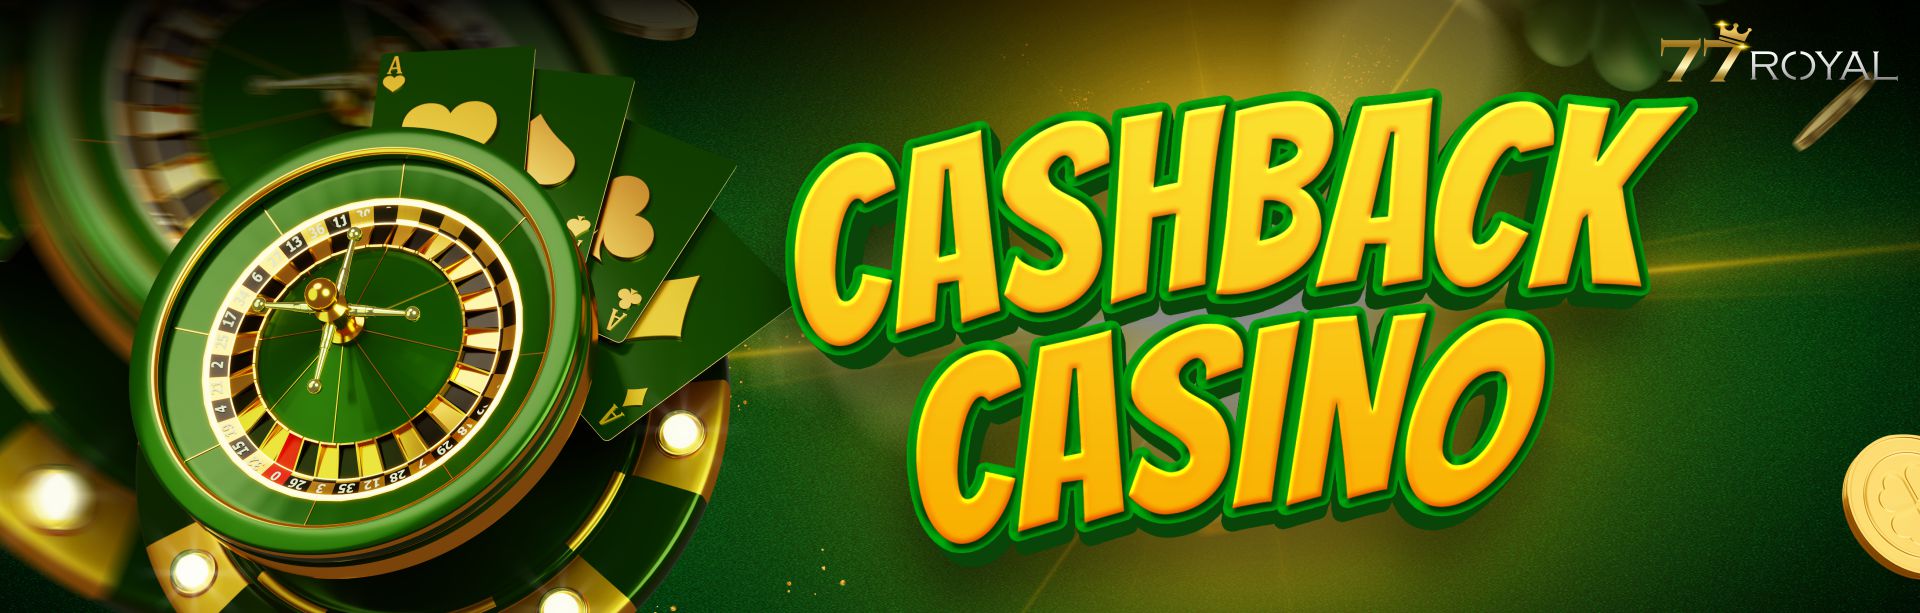 Cashback Casino 77Royal